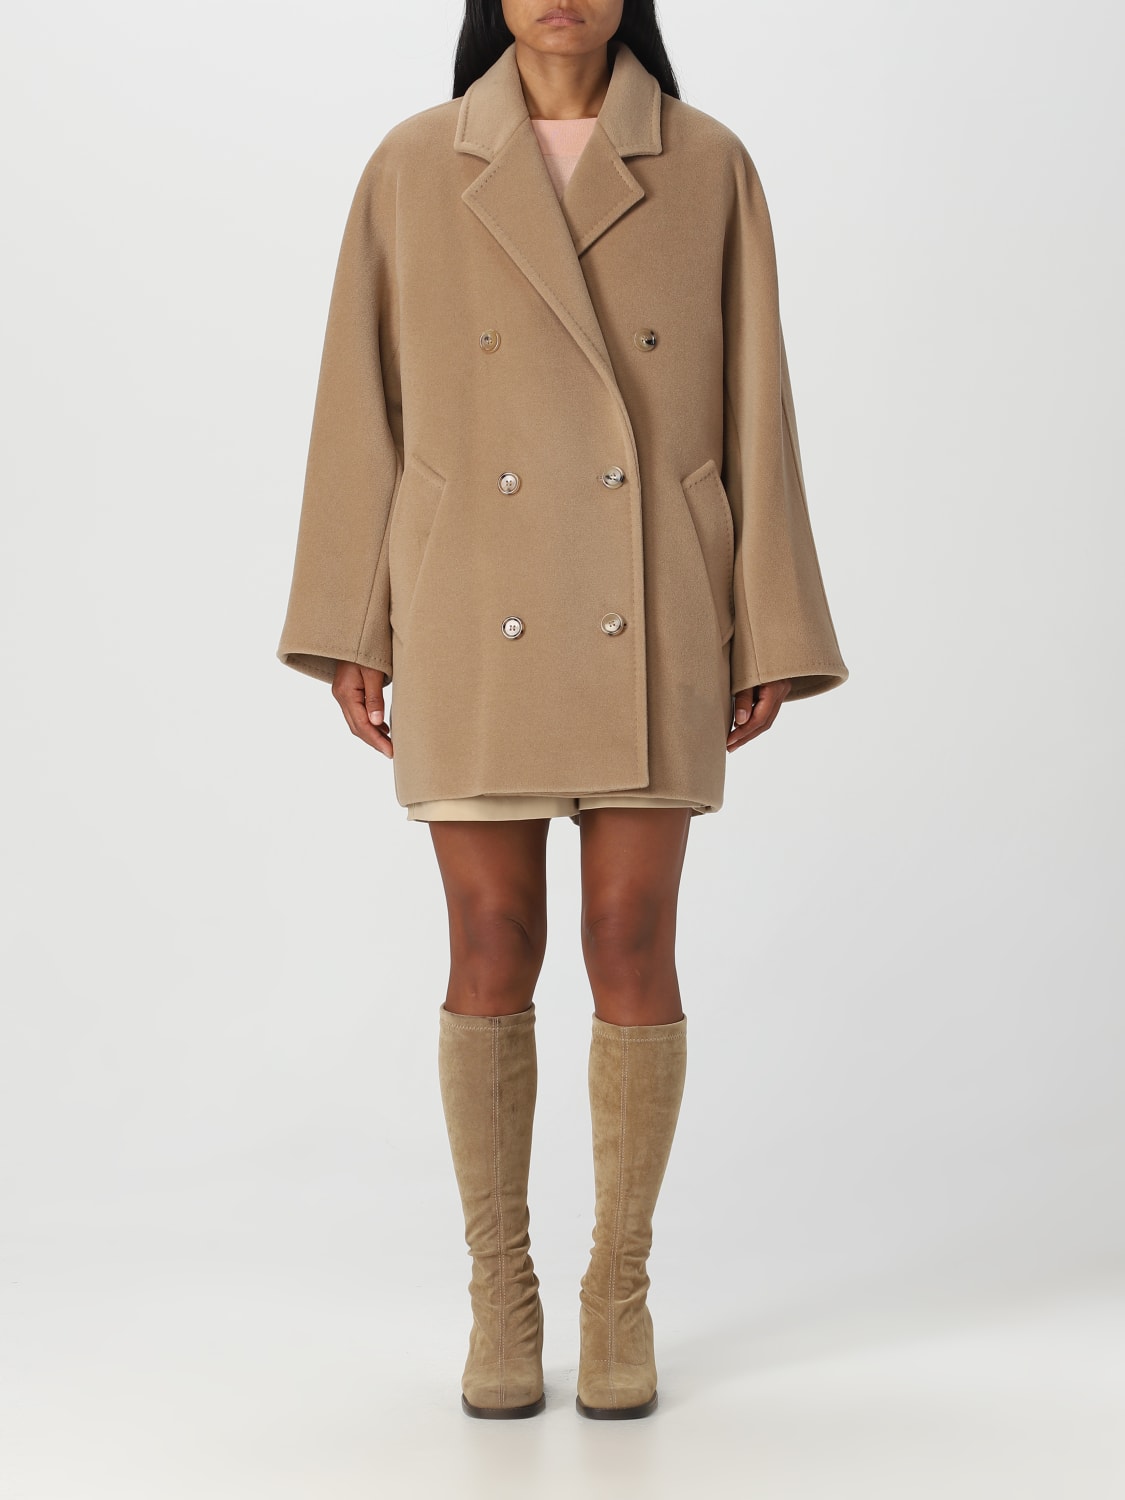 MAX MARA: Rebus coat in wool and cashmere - Camel | Max Mara coat